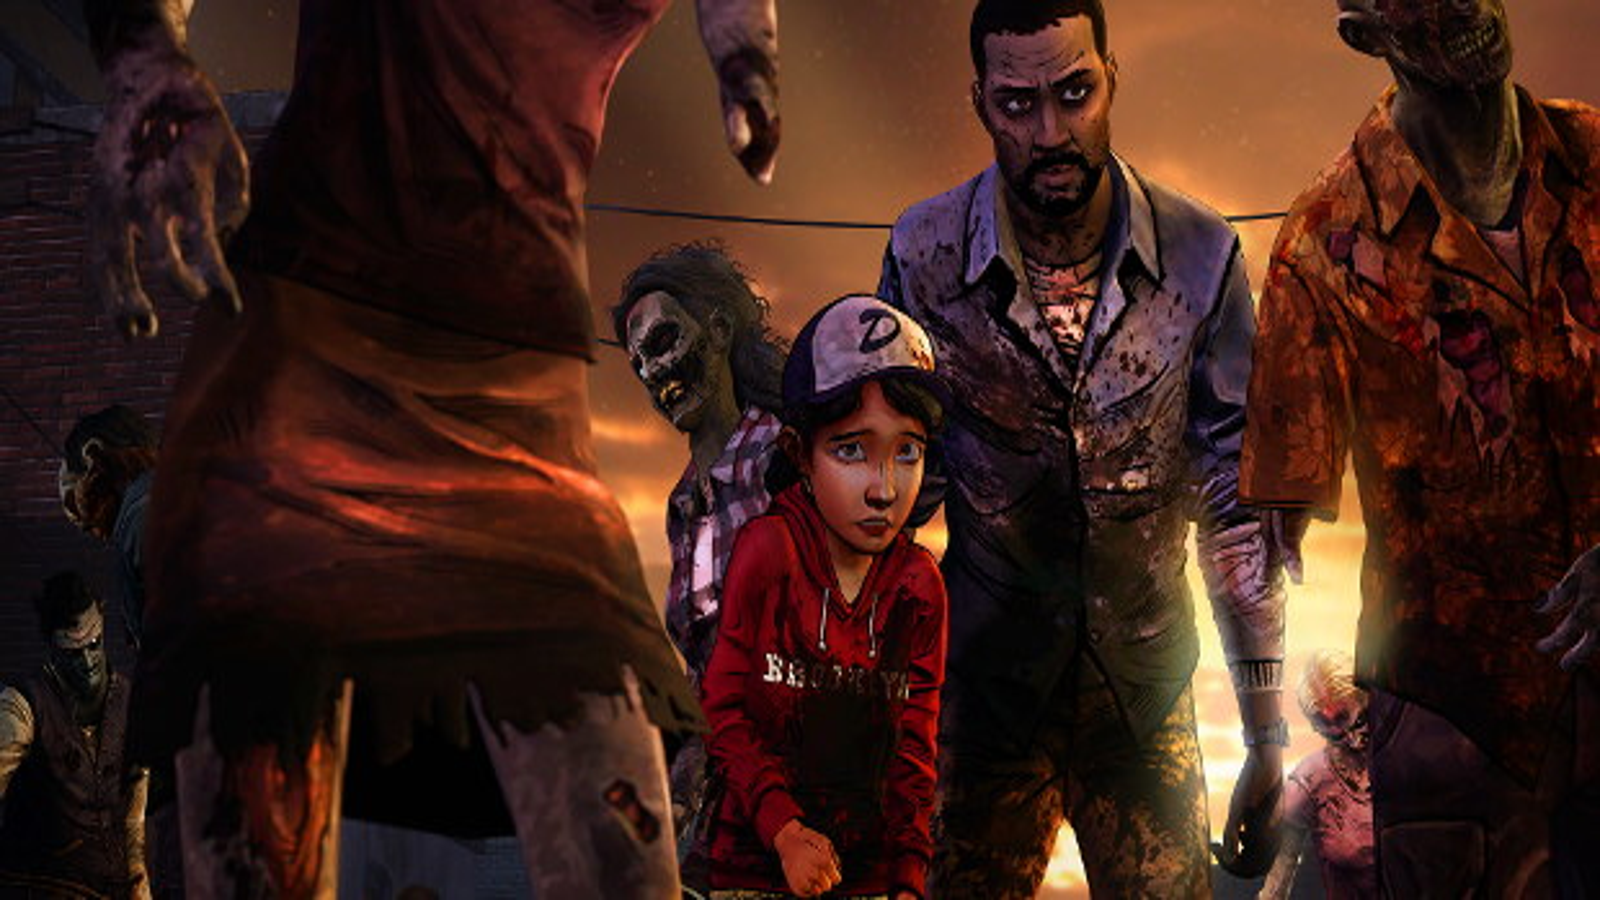 The Walking Dead:Season 5: NEW GAME CONFIRMED!? (Telltale Games Update) 